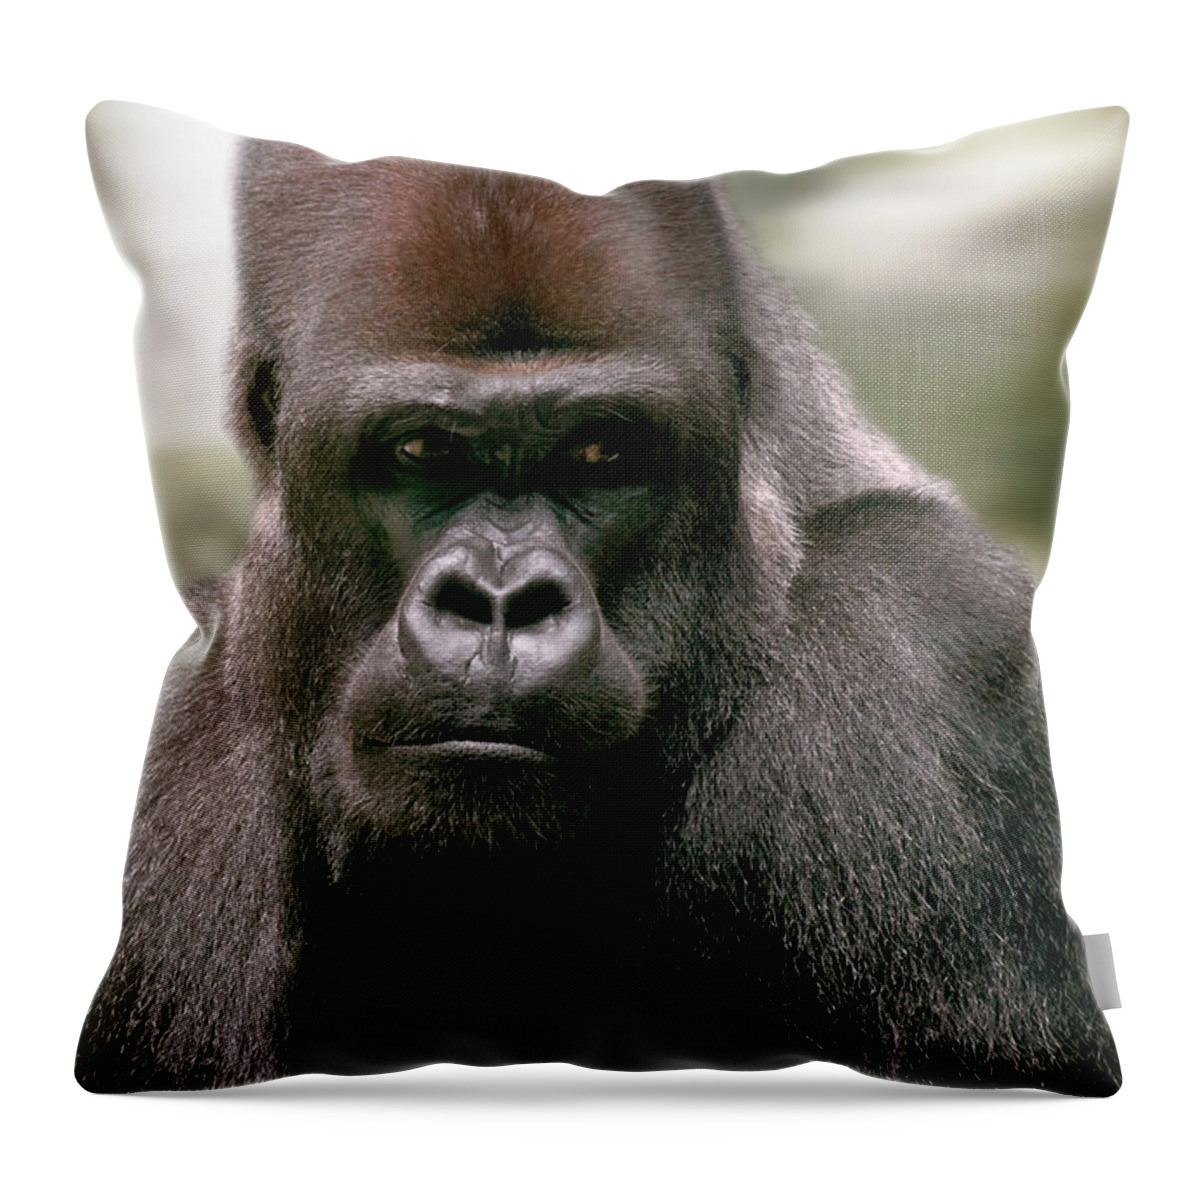 Gorilla Throw Pillow featuring the photograph The Gorilla by Christine Sponchia